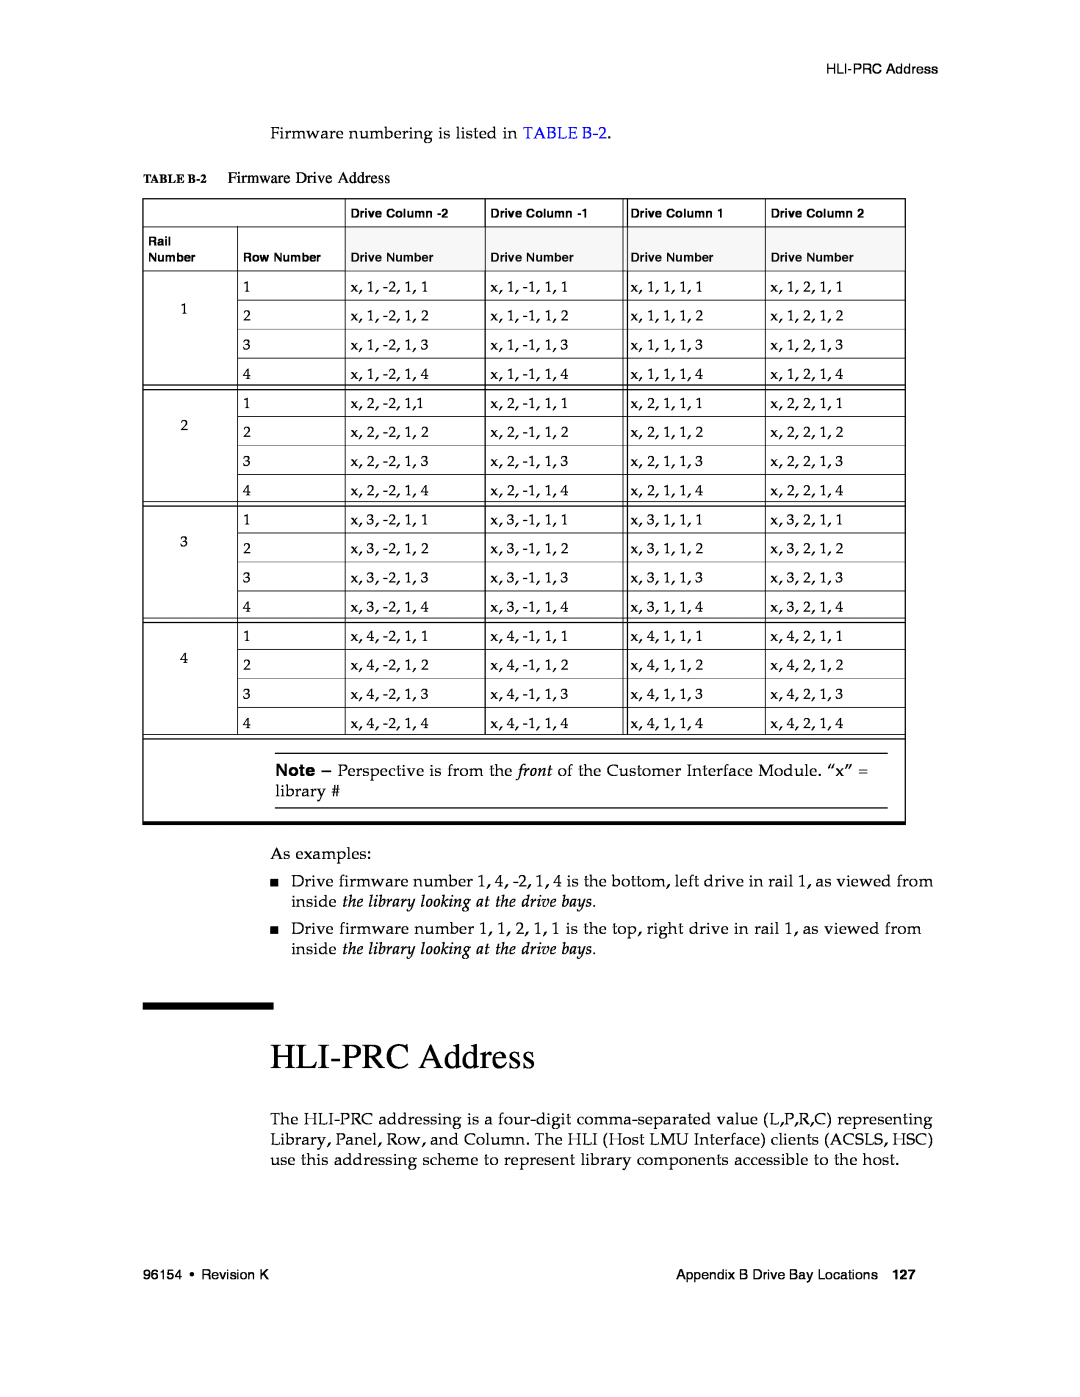 Sun Microsystems SL8500 manual HLI-PRC Address, Firmware Drive Address 